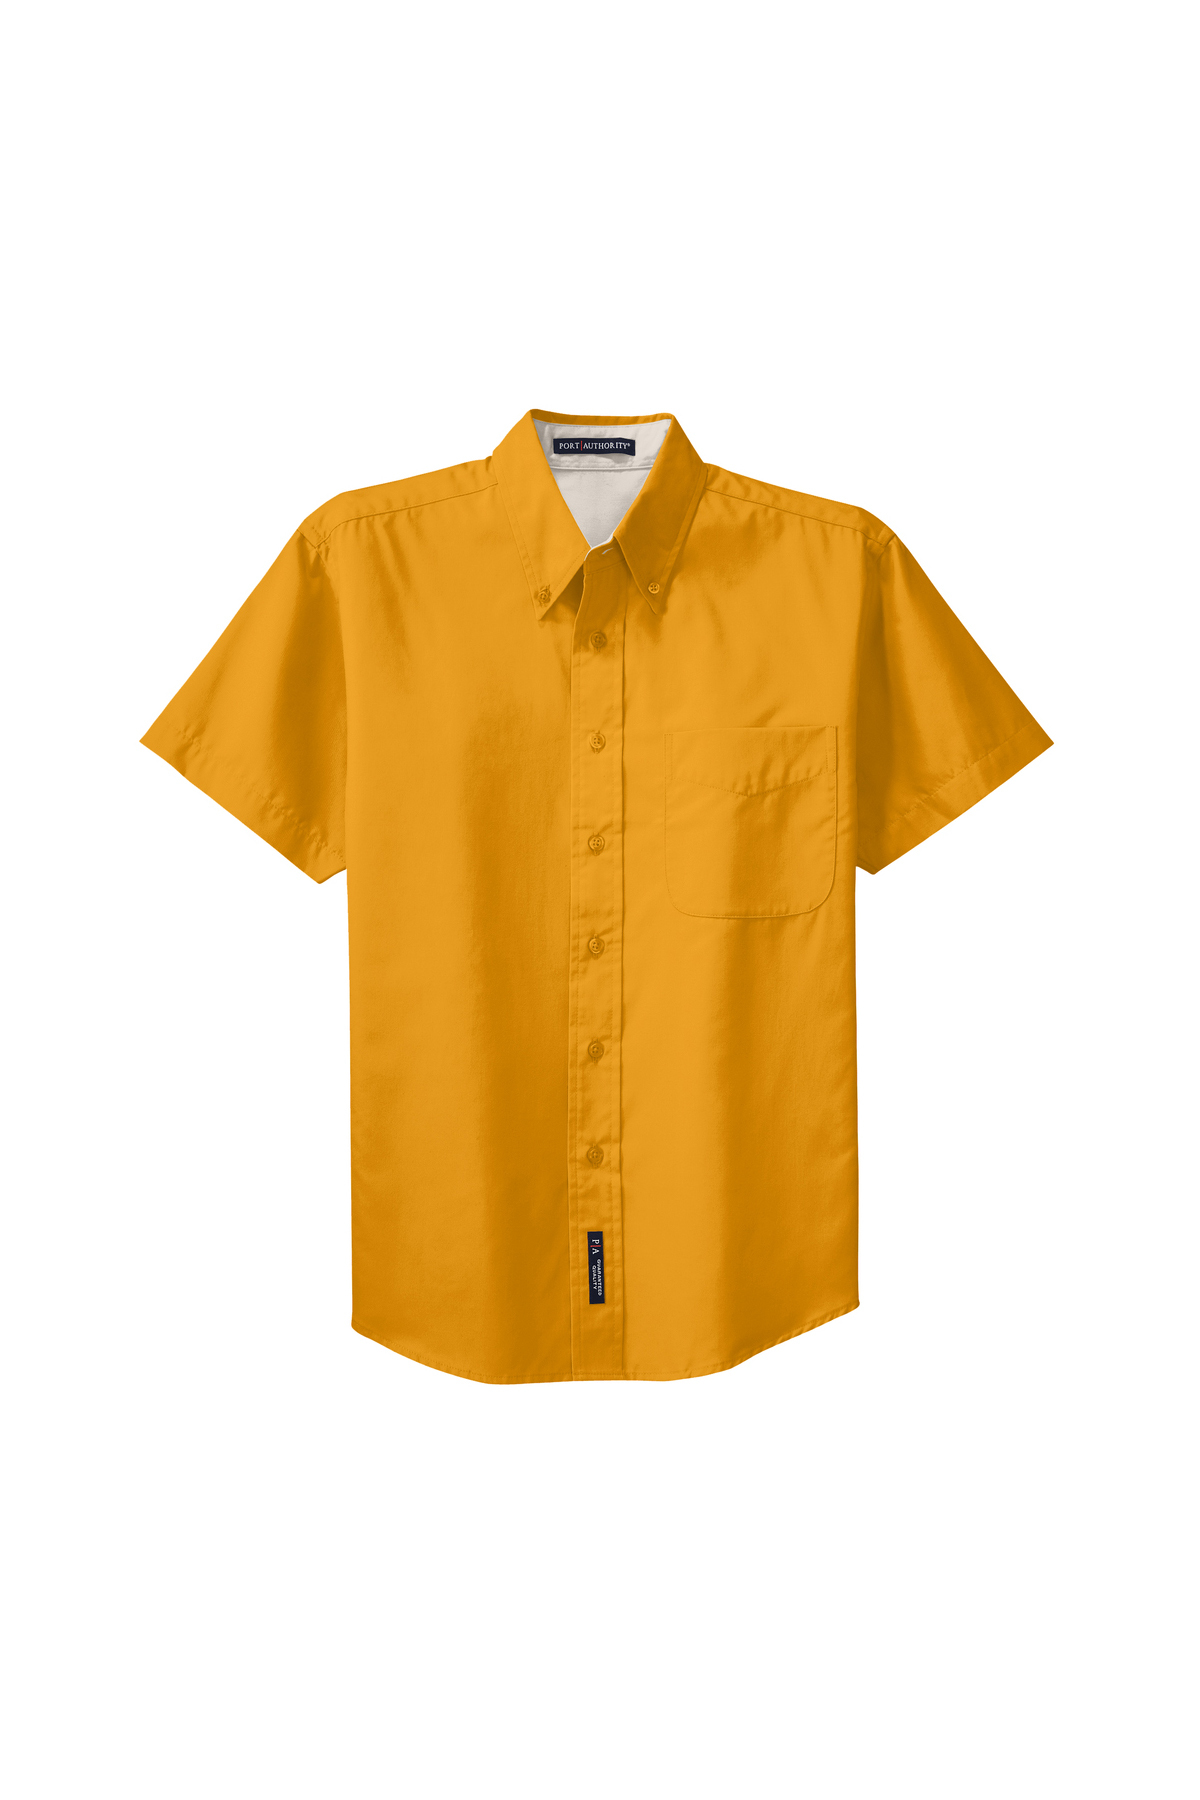 Port Authority Short Sleeve Easy Care Shirt | Product | SanMar